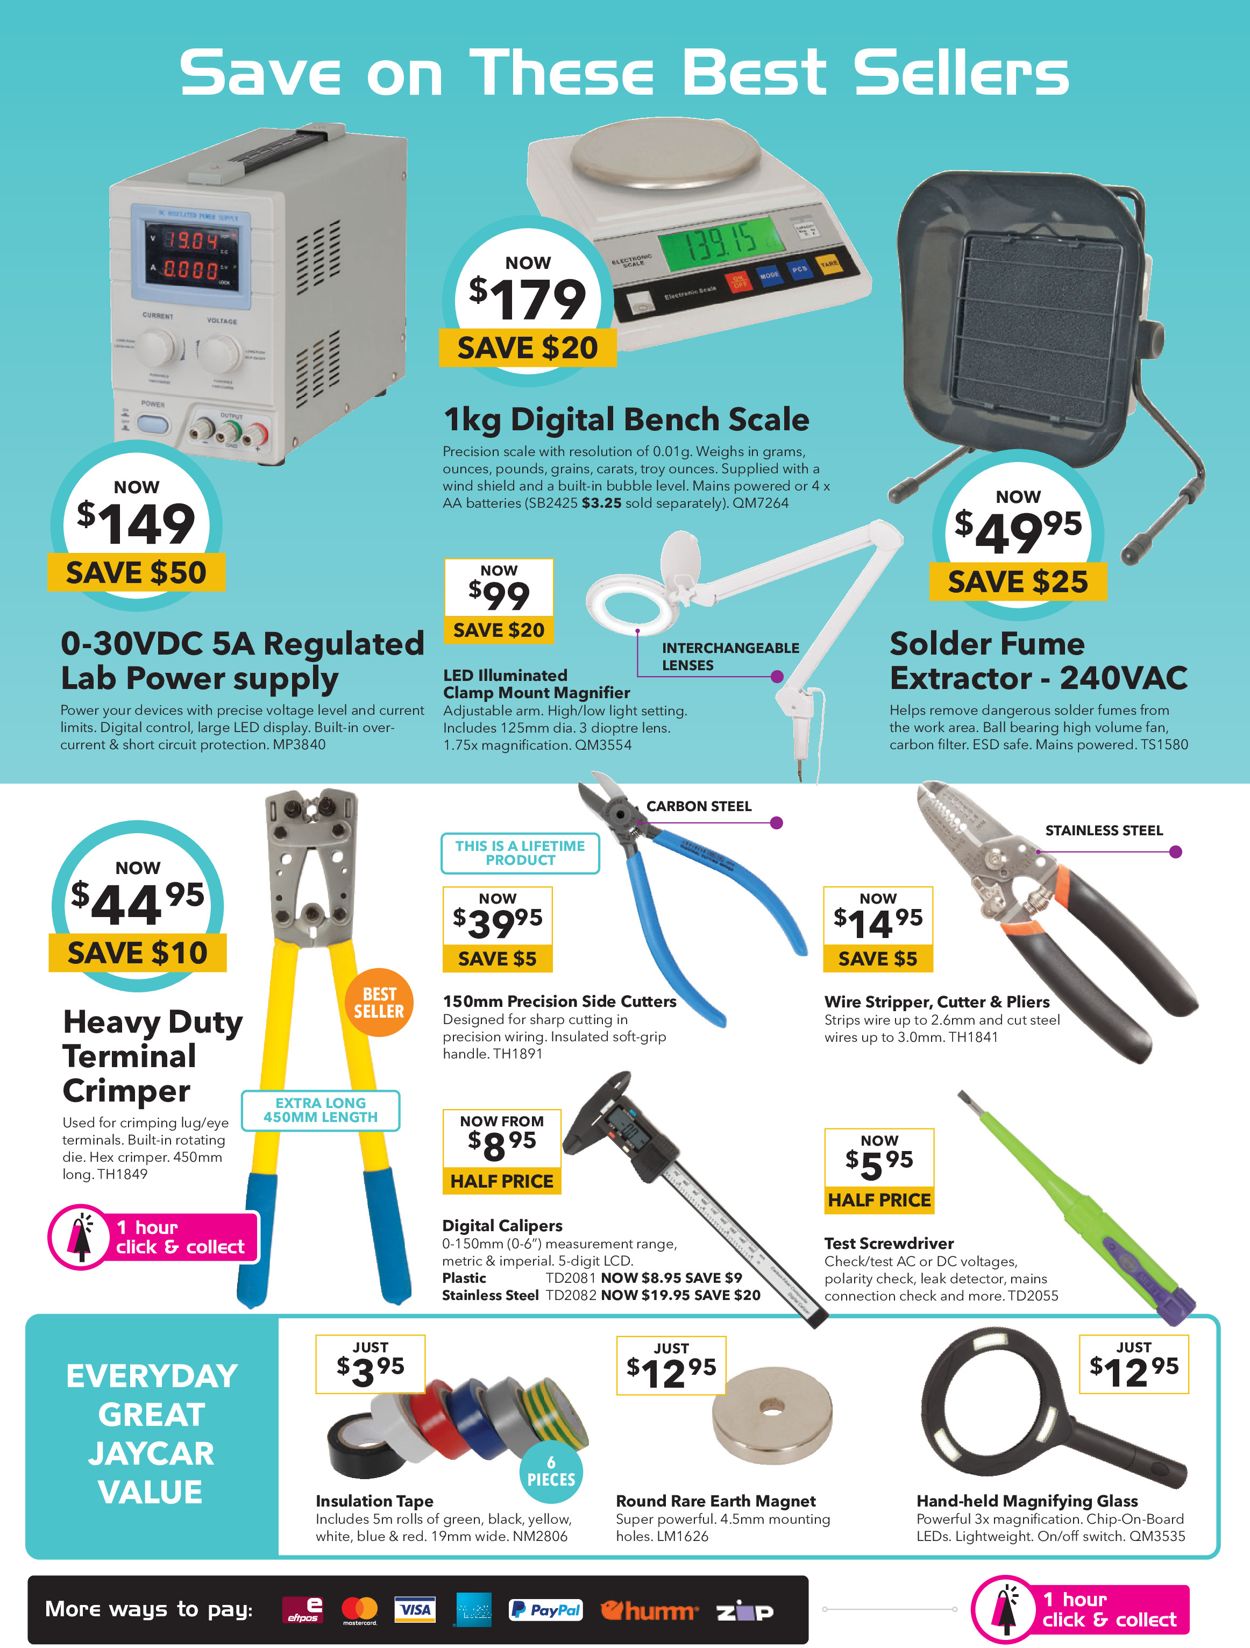 Jaycar Electronics Catalogue from 24/04/2022